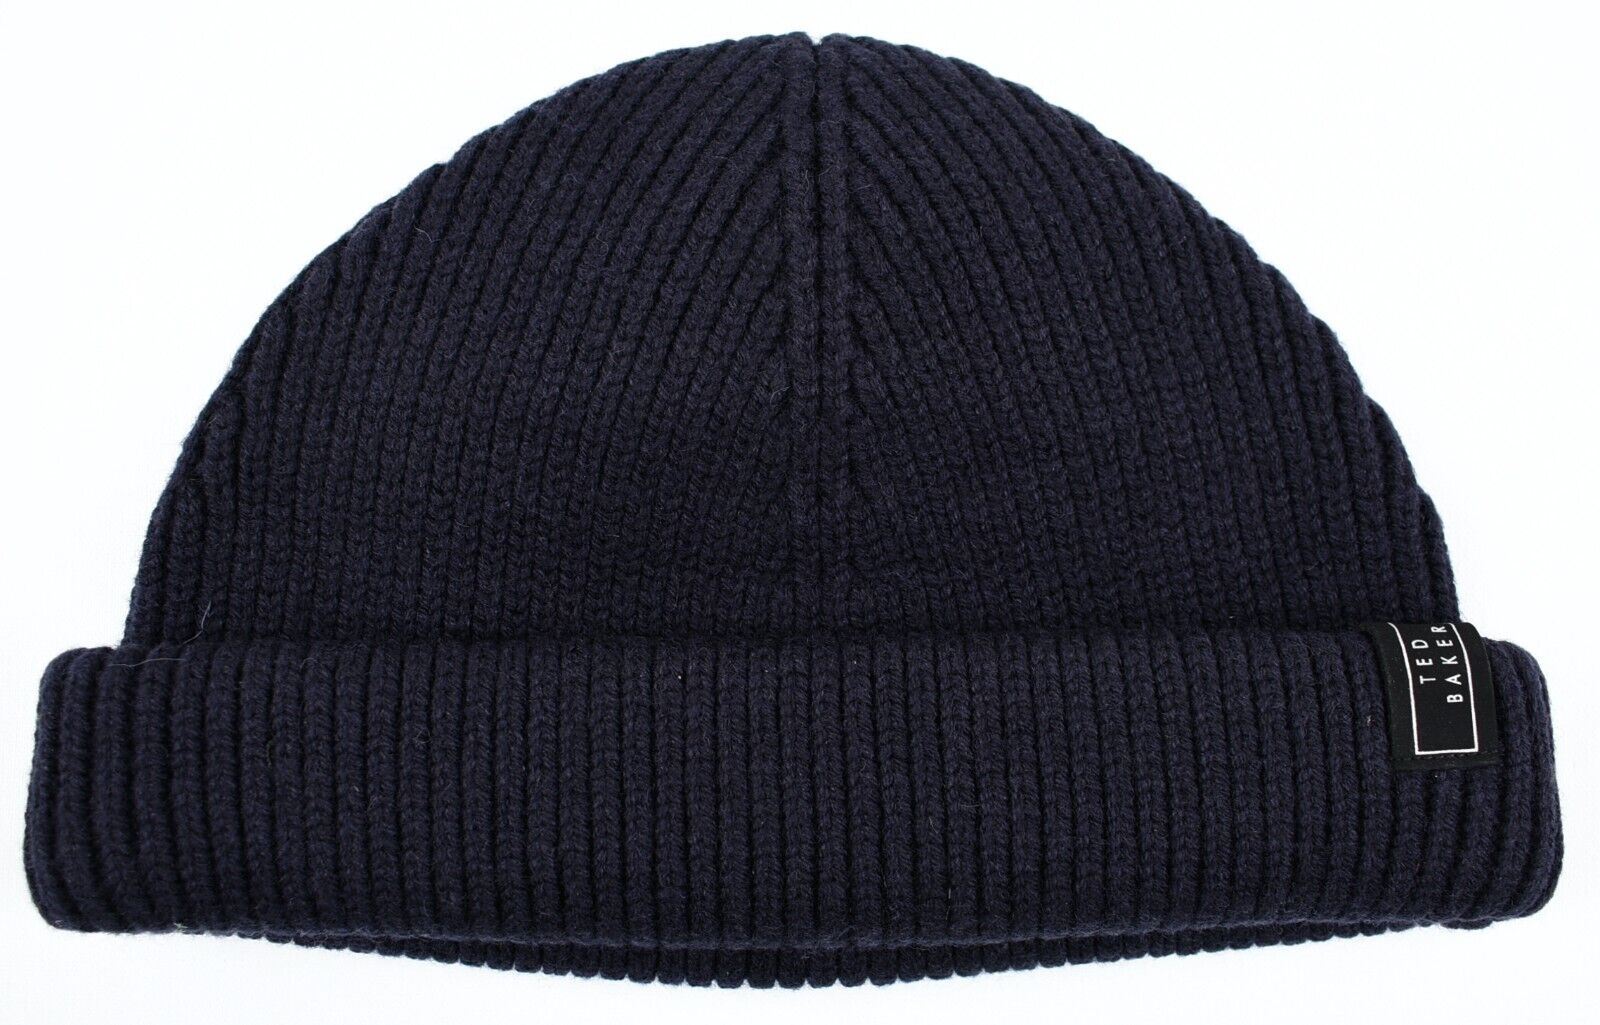 TED BAKER Men's FISHERMAN Rib Knit Beanie Hat, One Size